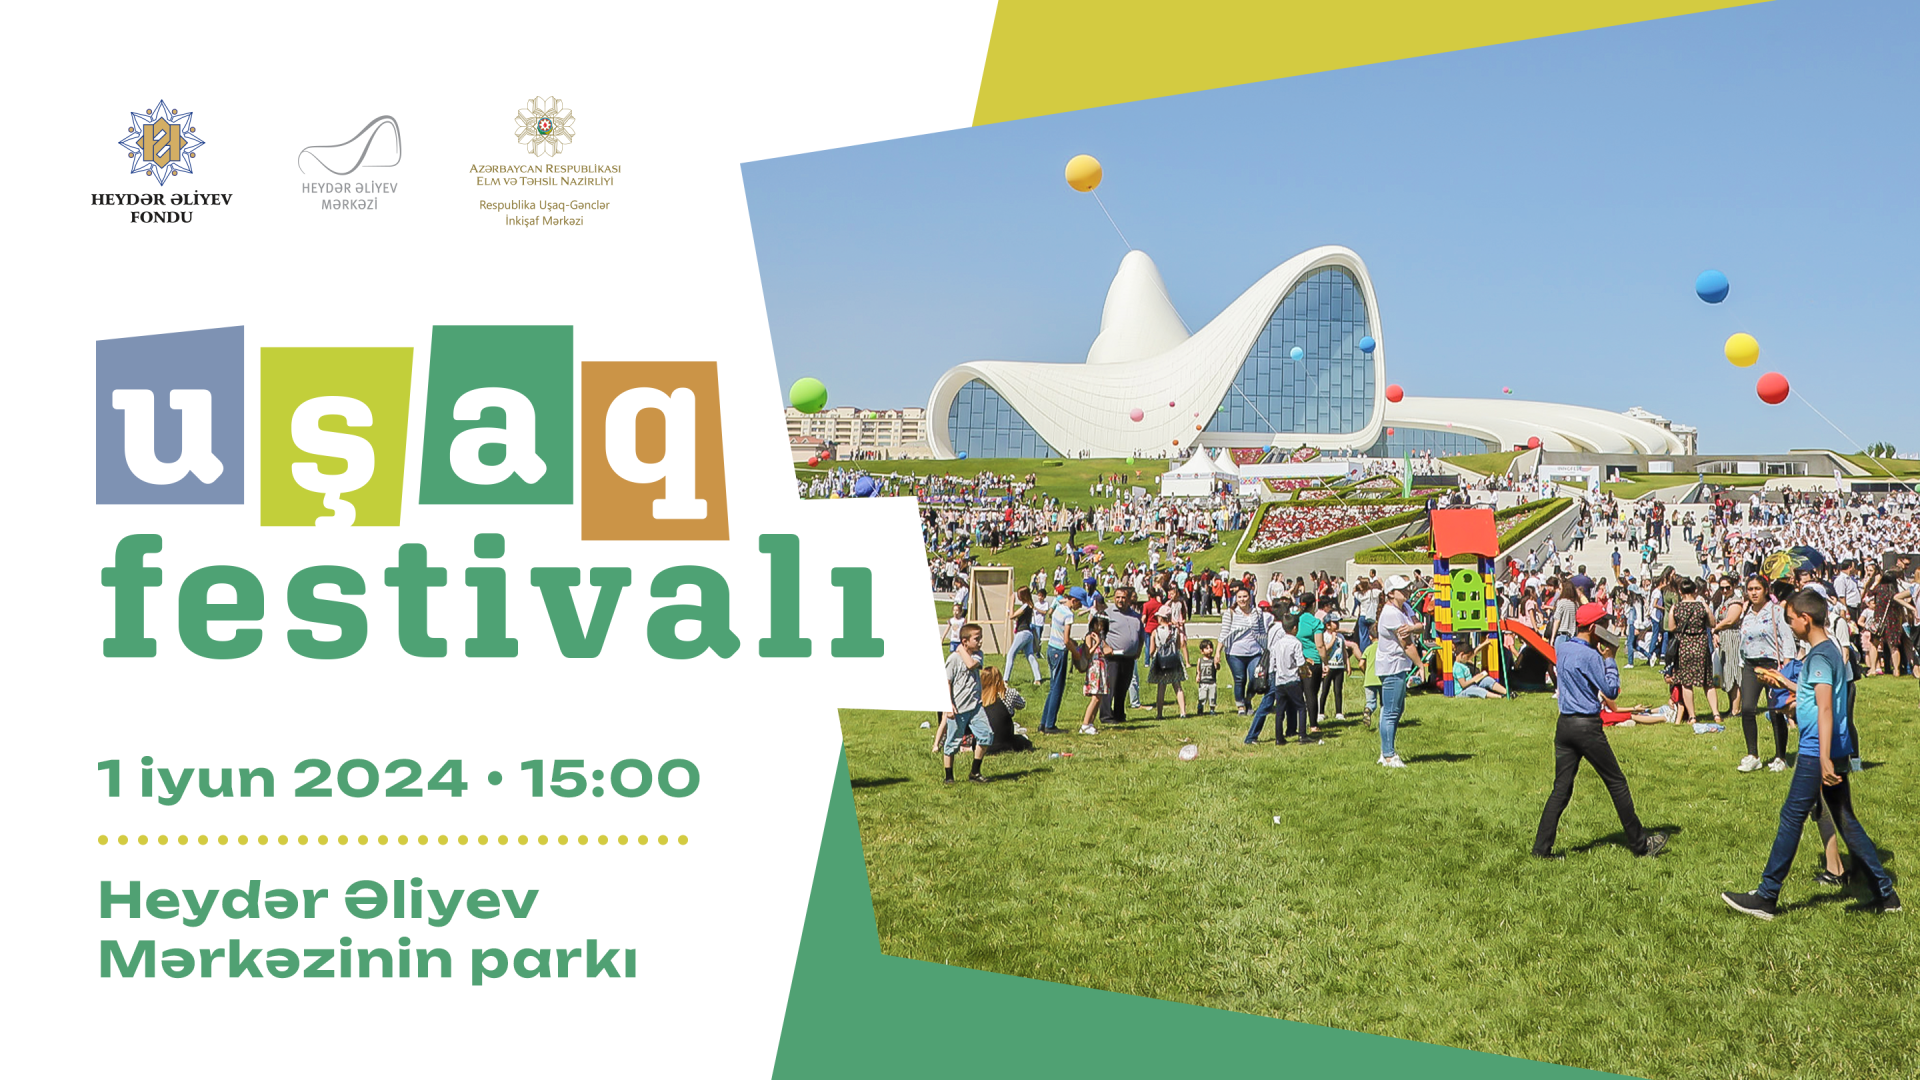 Children's festival to be organized in park of Heydar Aliyev Centre